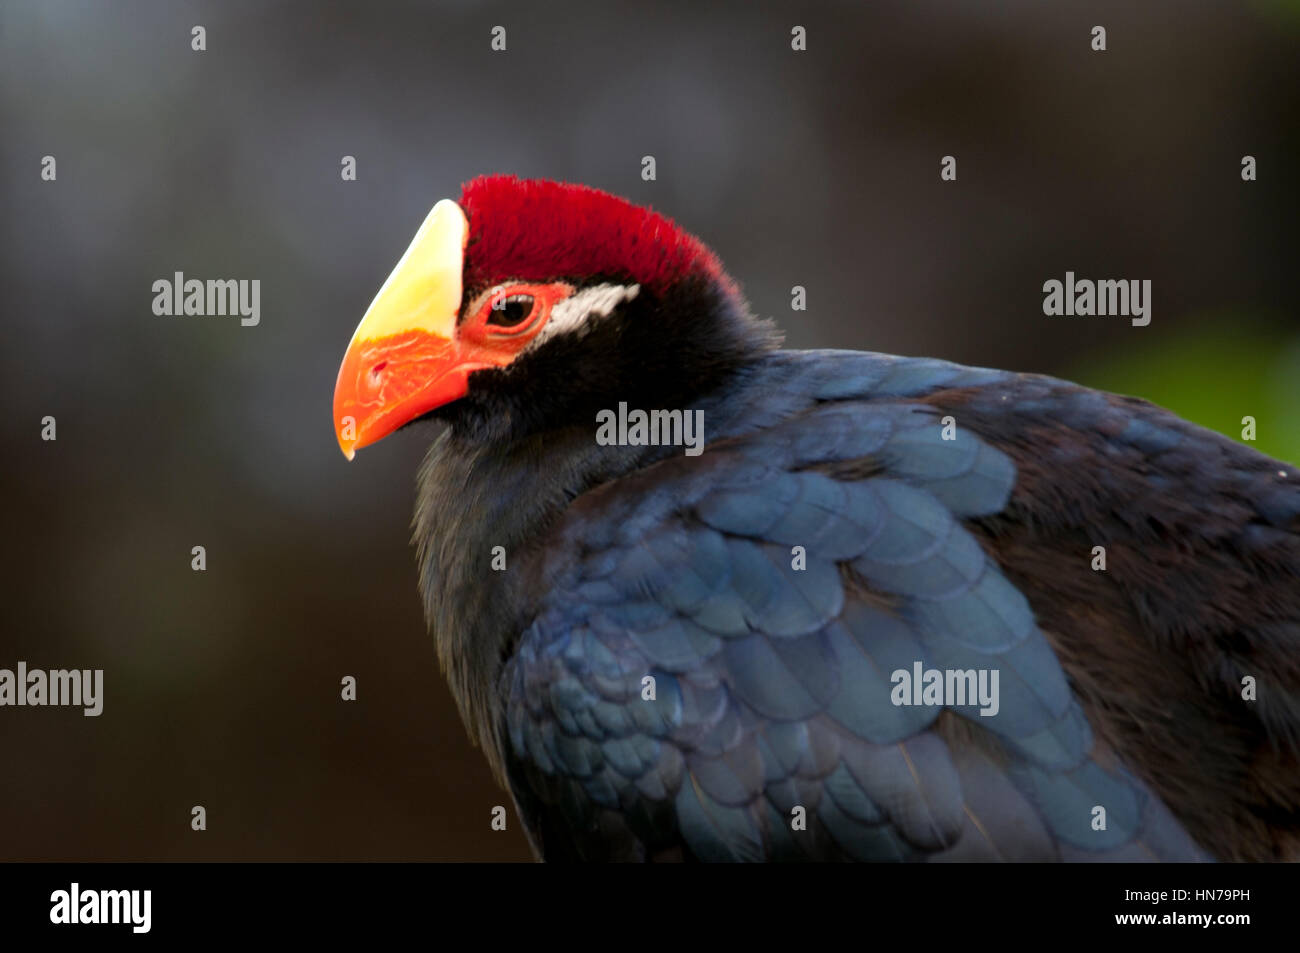 black bird with orange beak and red and yellow head Stock Photo - Alamy